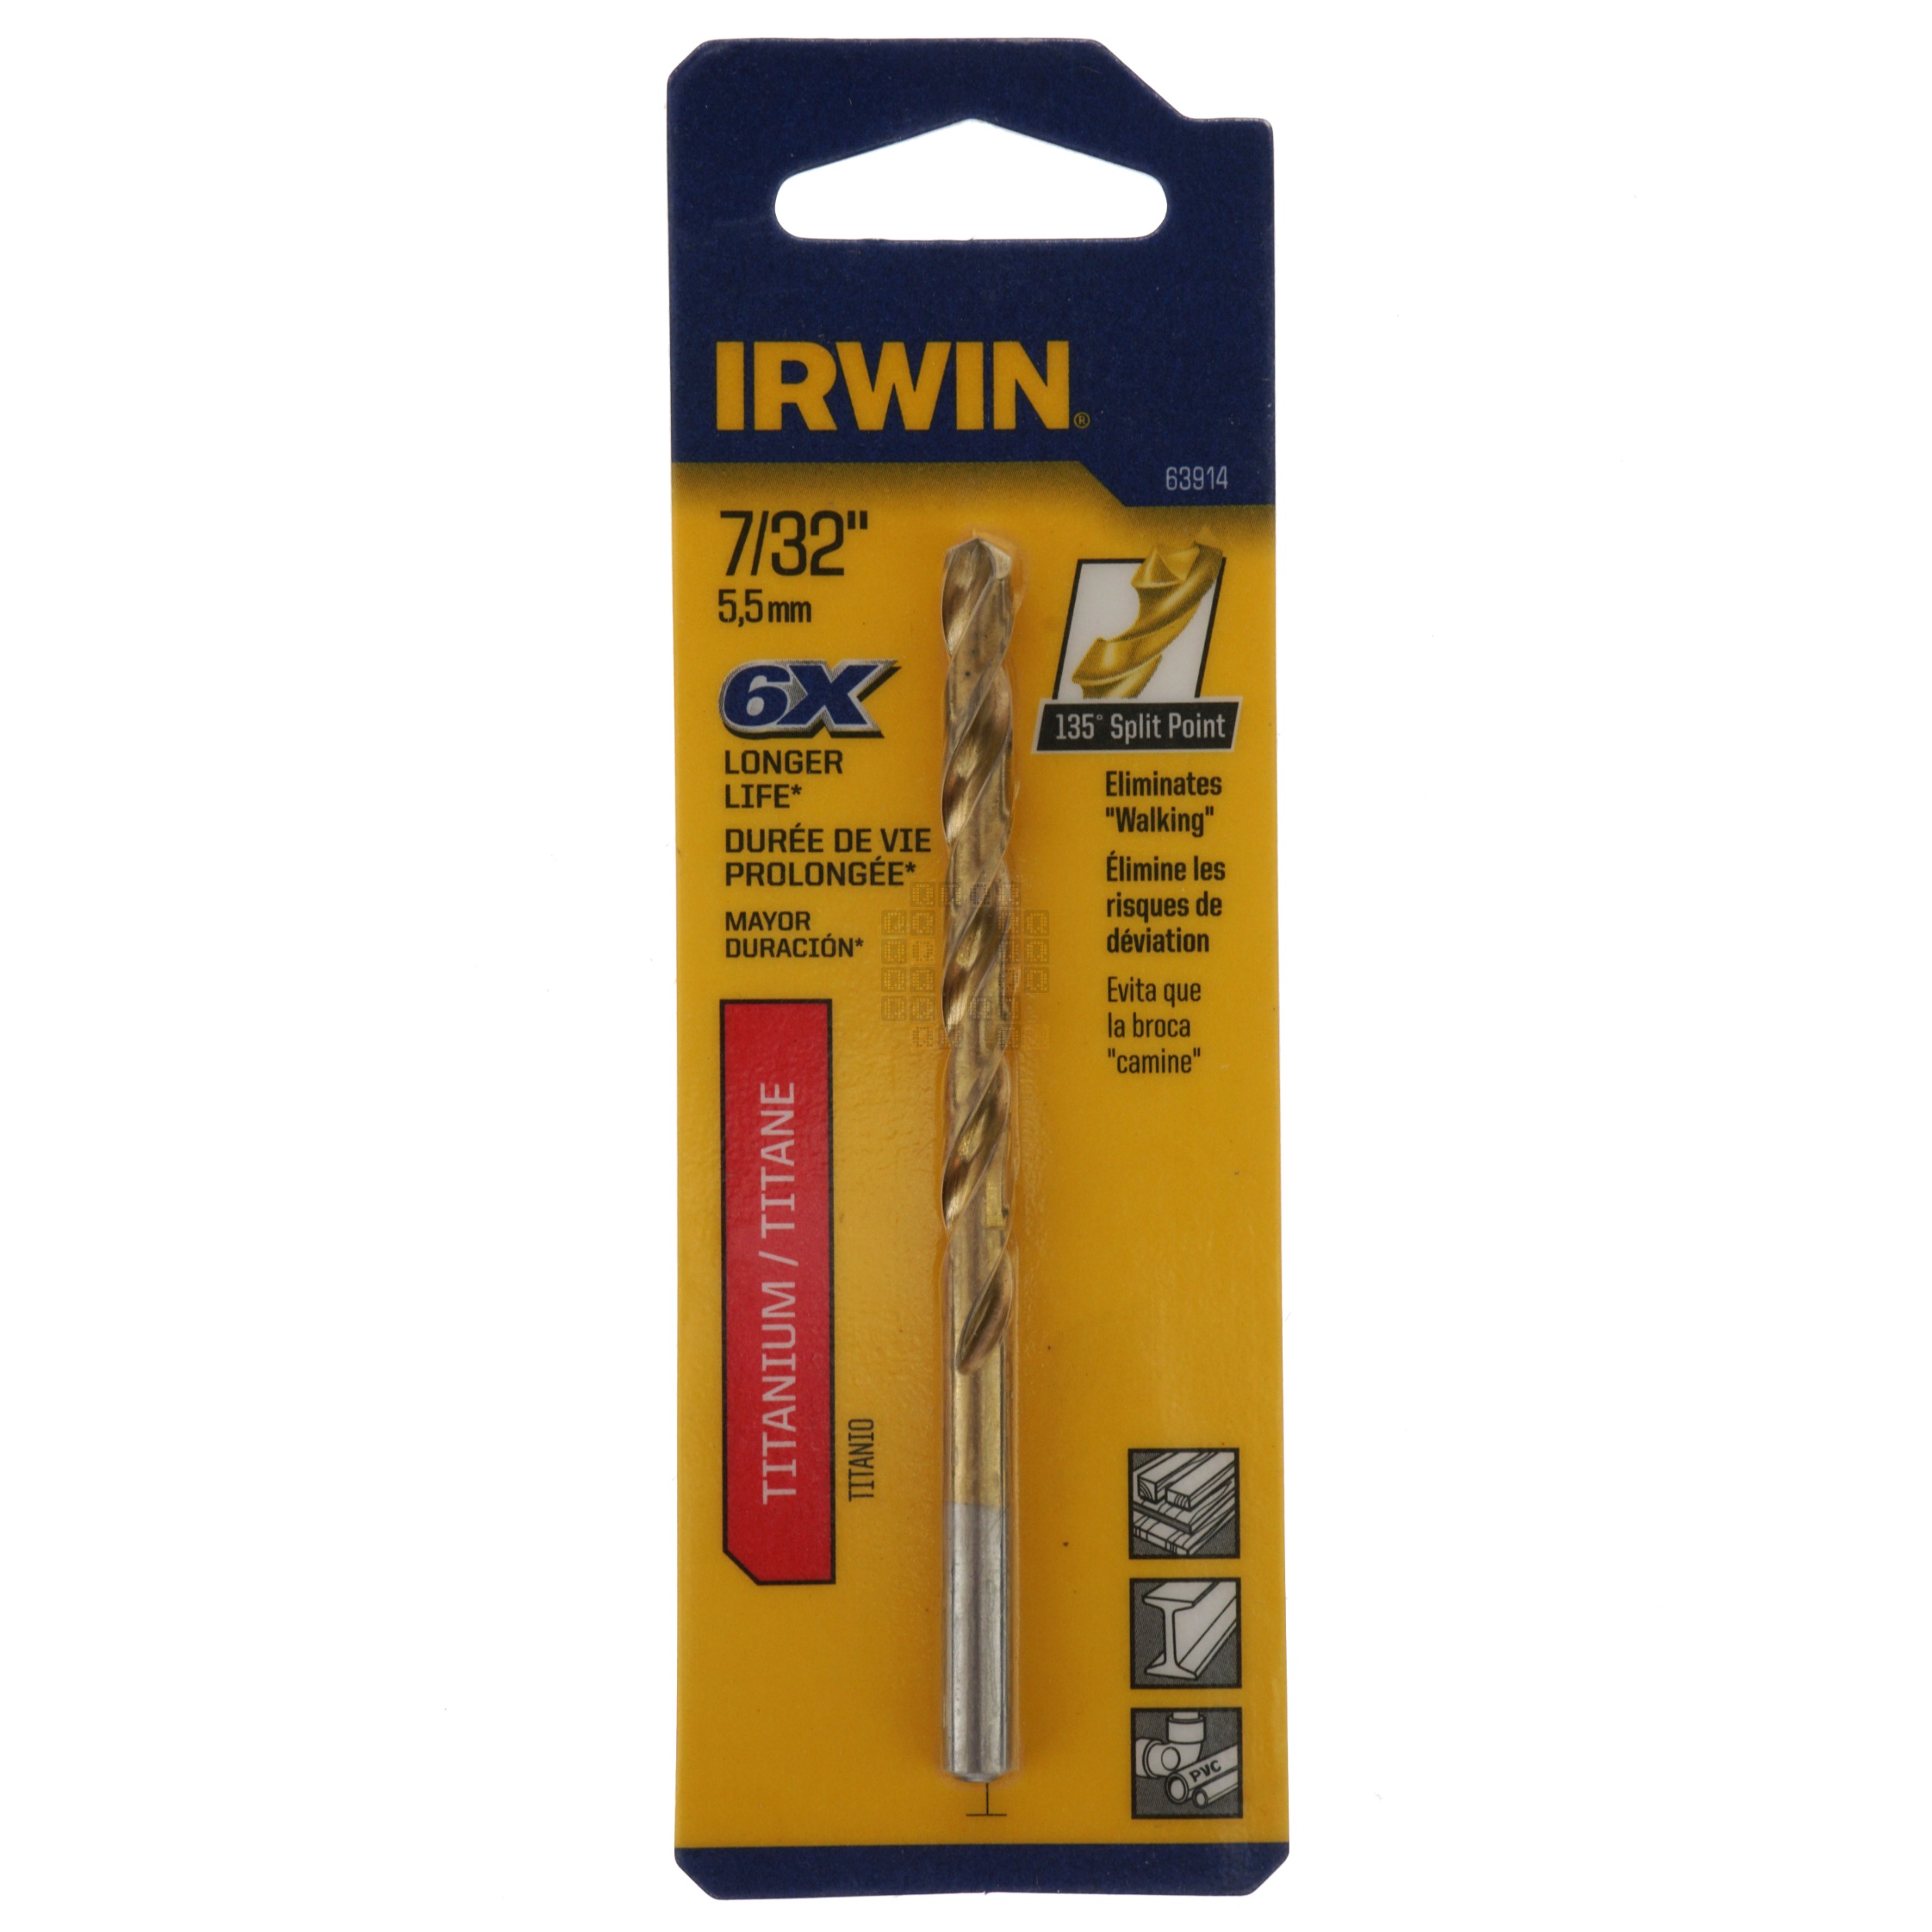 Irwin 63914 7/32" Titanium Coated 135° Split Point Drill Bit